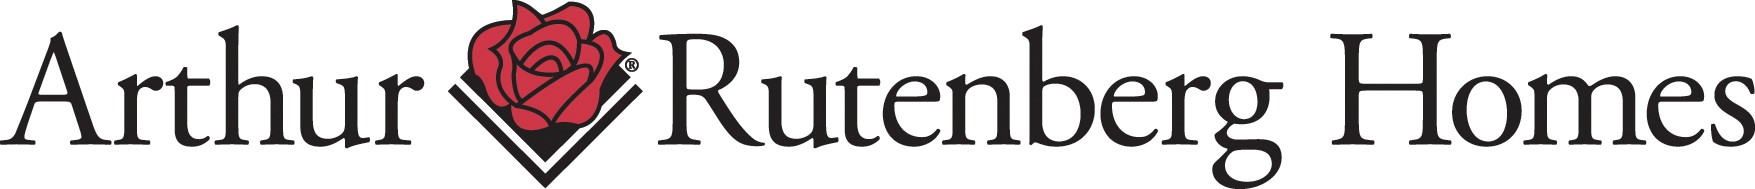 Luxury Partners - Arthur Rutenberg Homes